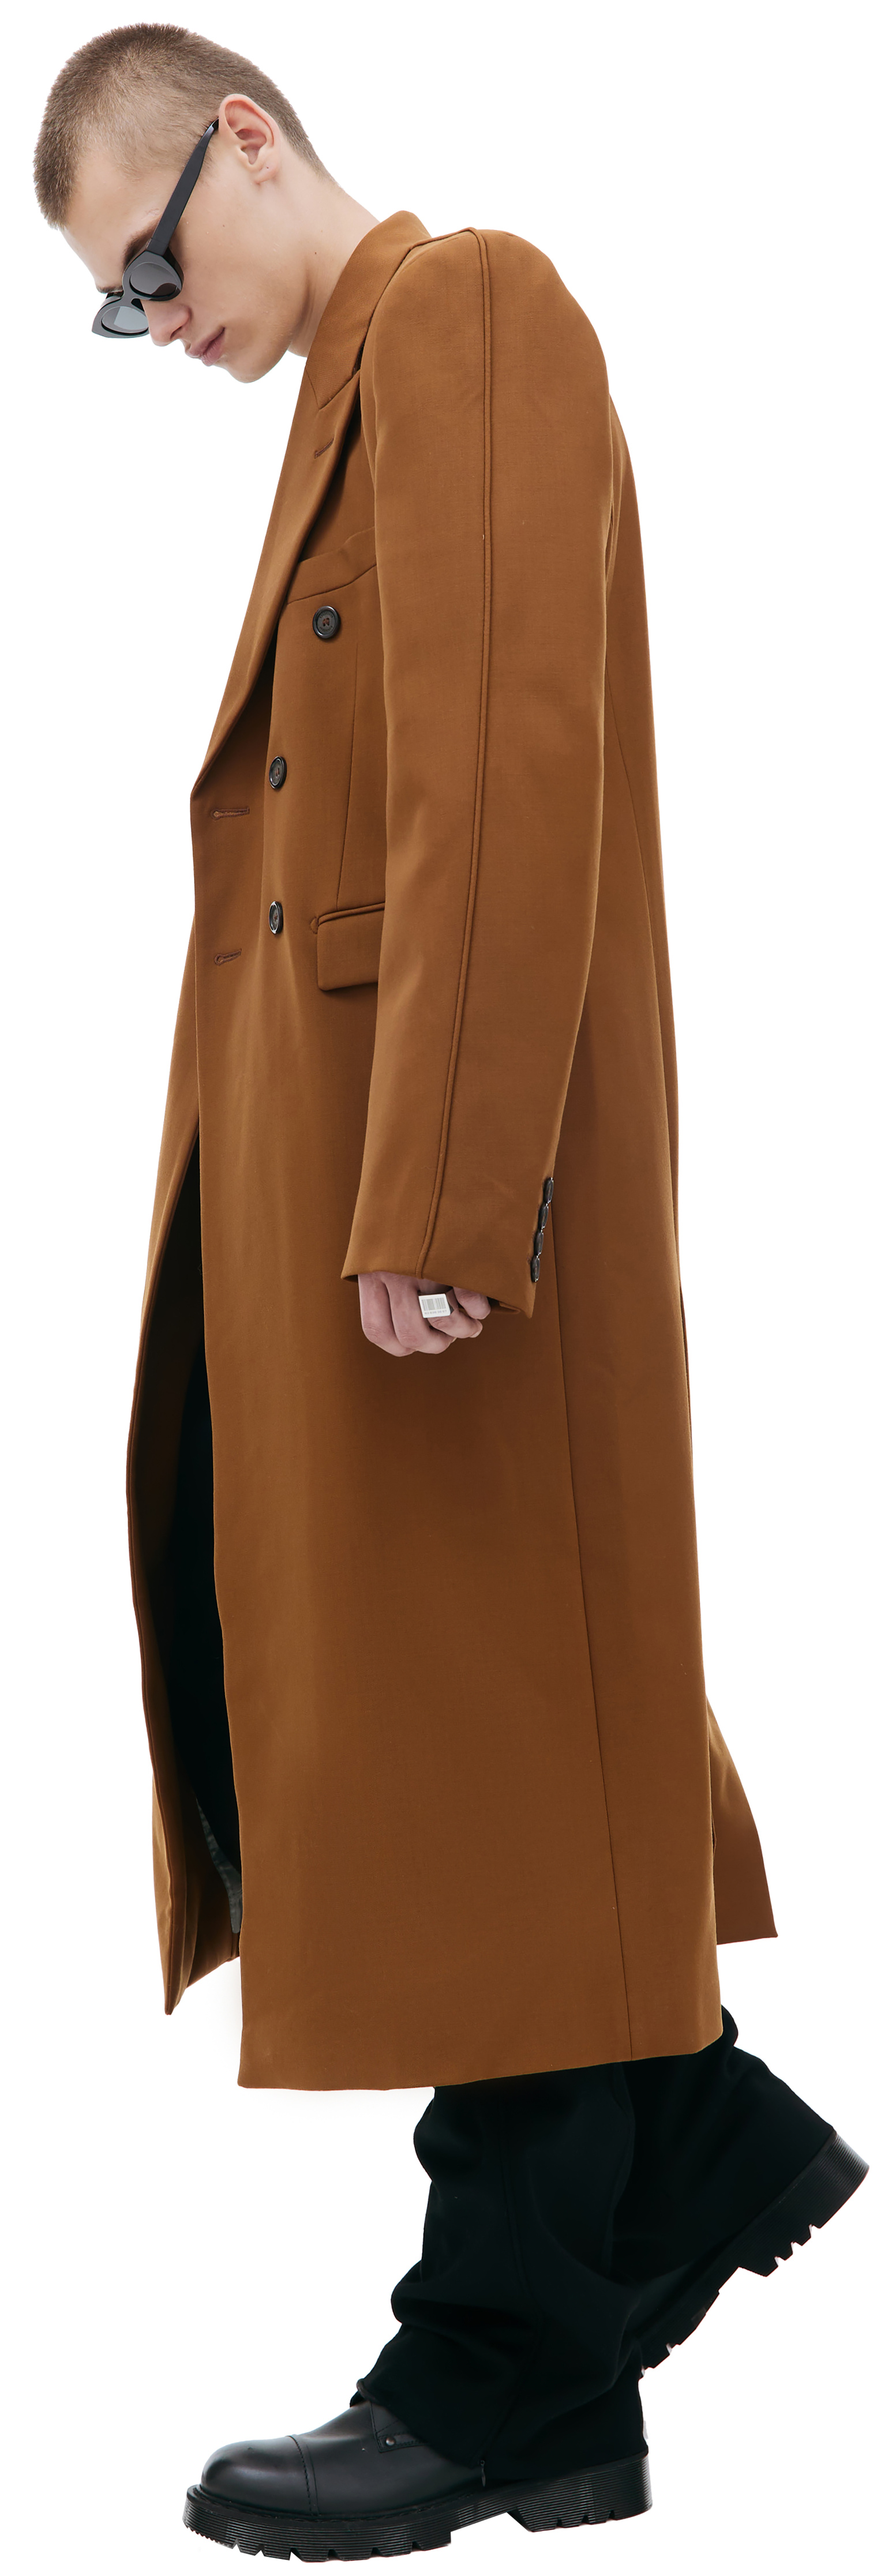 VTMNTS Brown wool coat